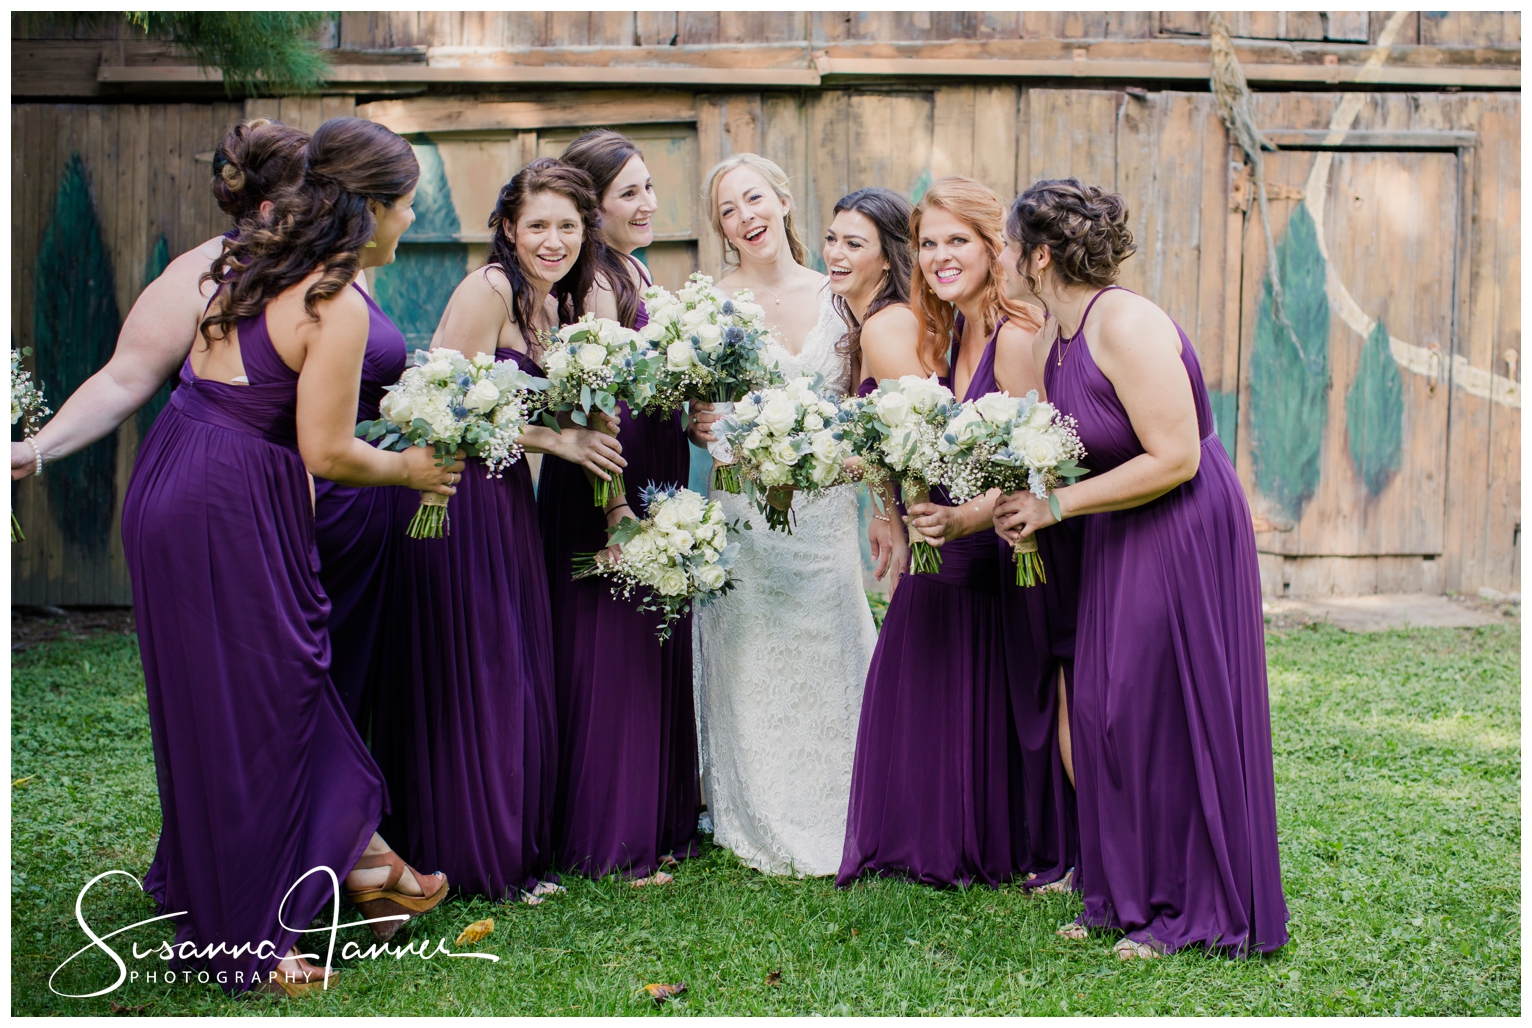 Indianapolis Outdoor Wedding, bride laughing with bridesmaids